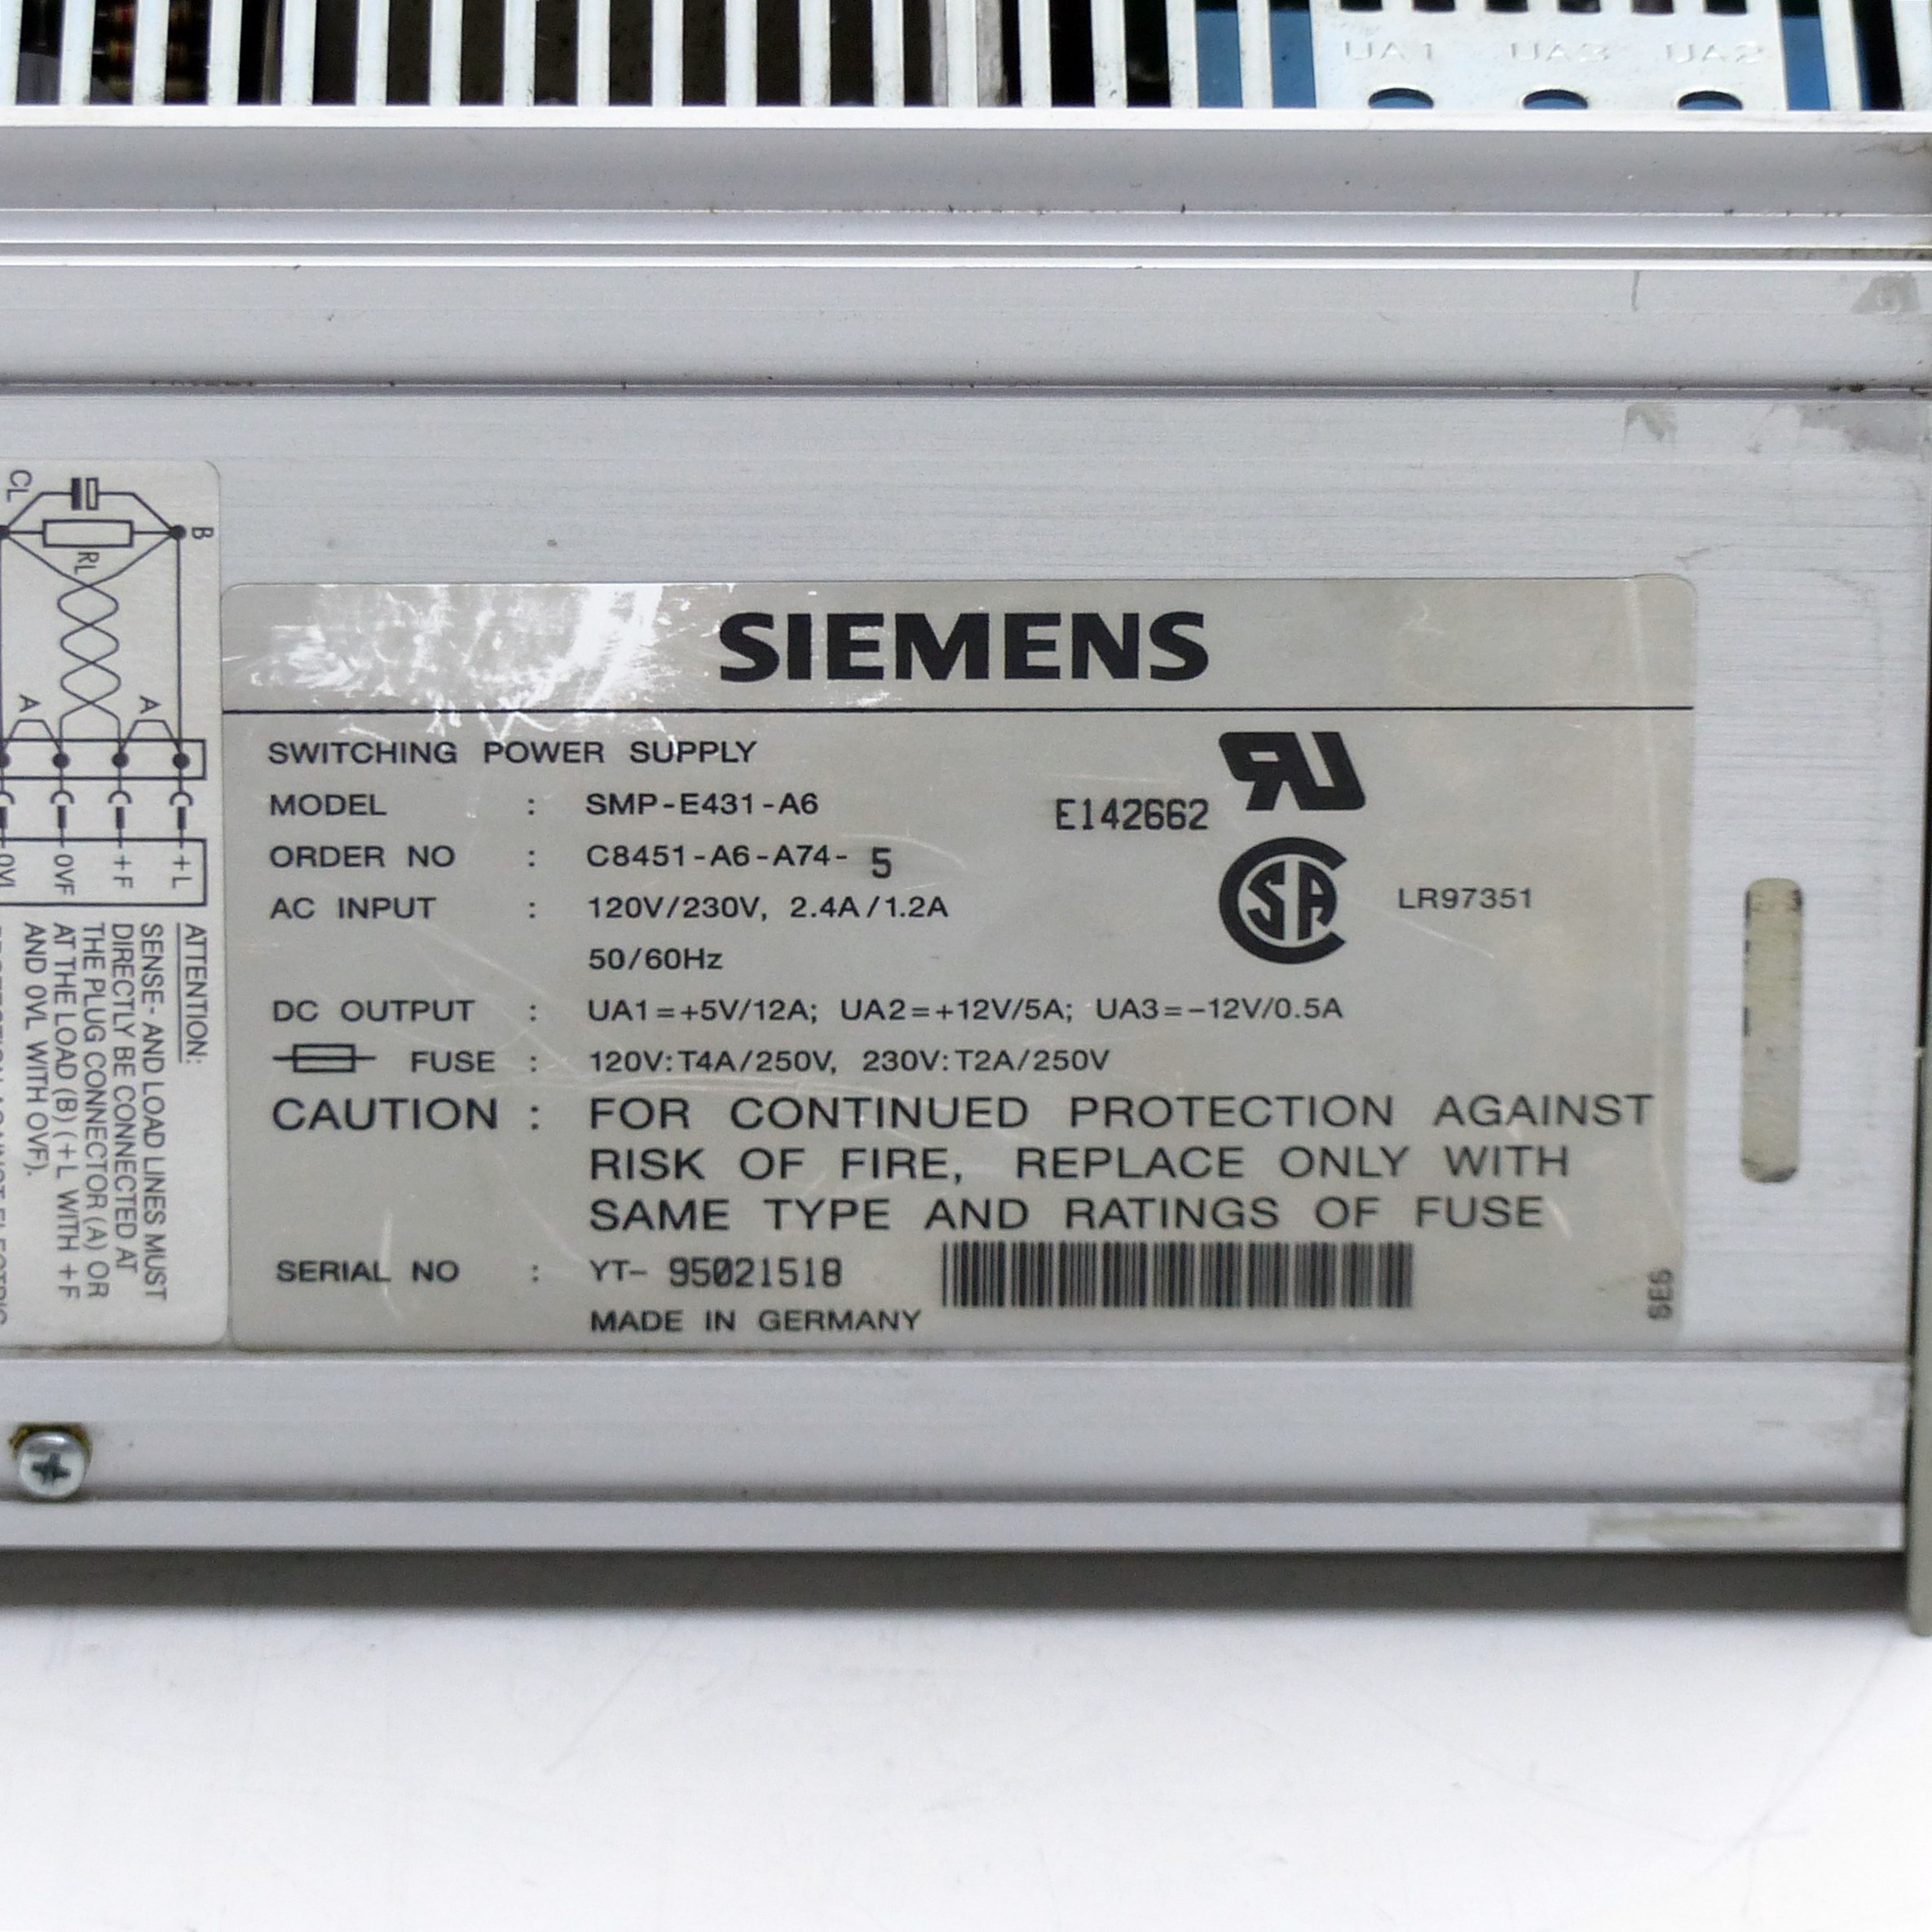 Power Supply Unit SMP-E431-A6 